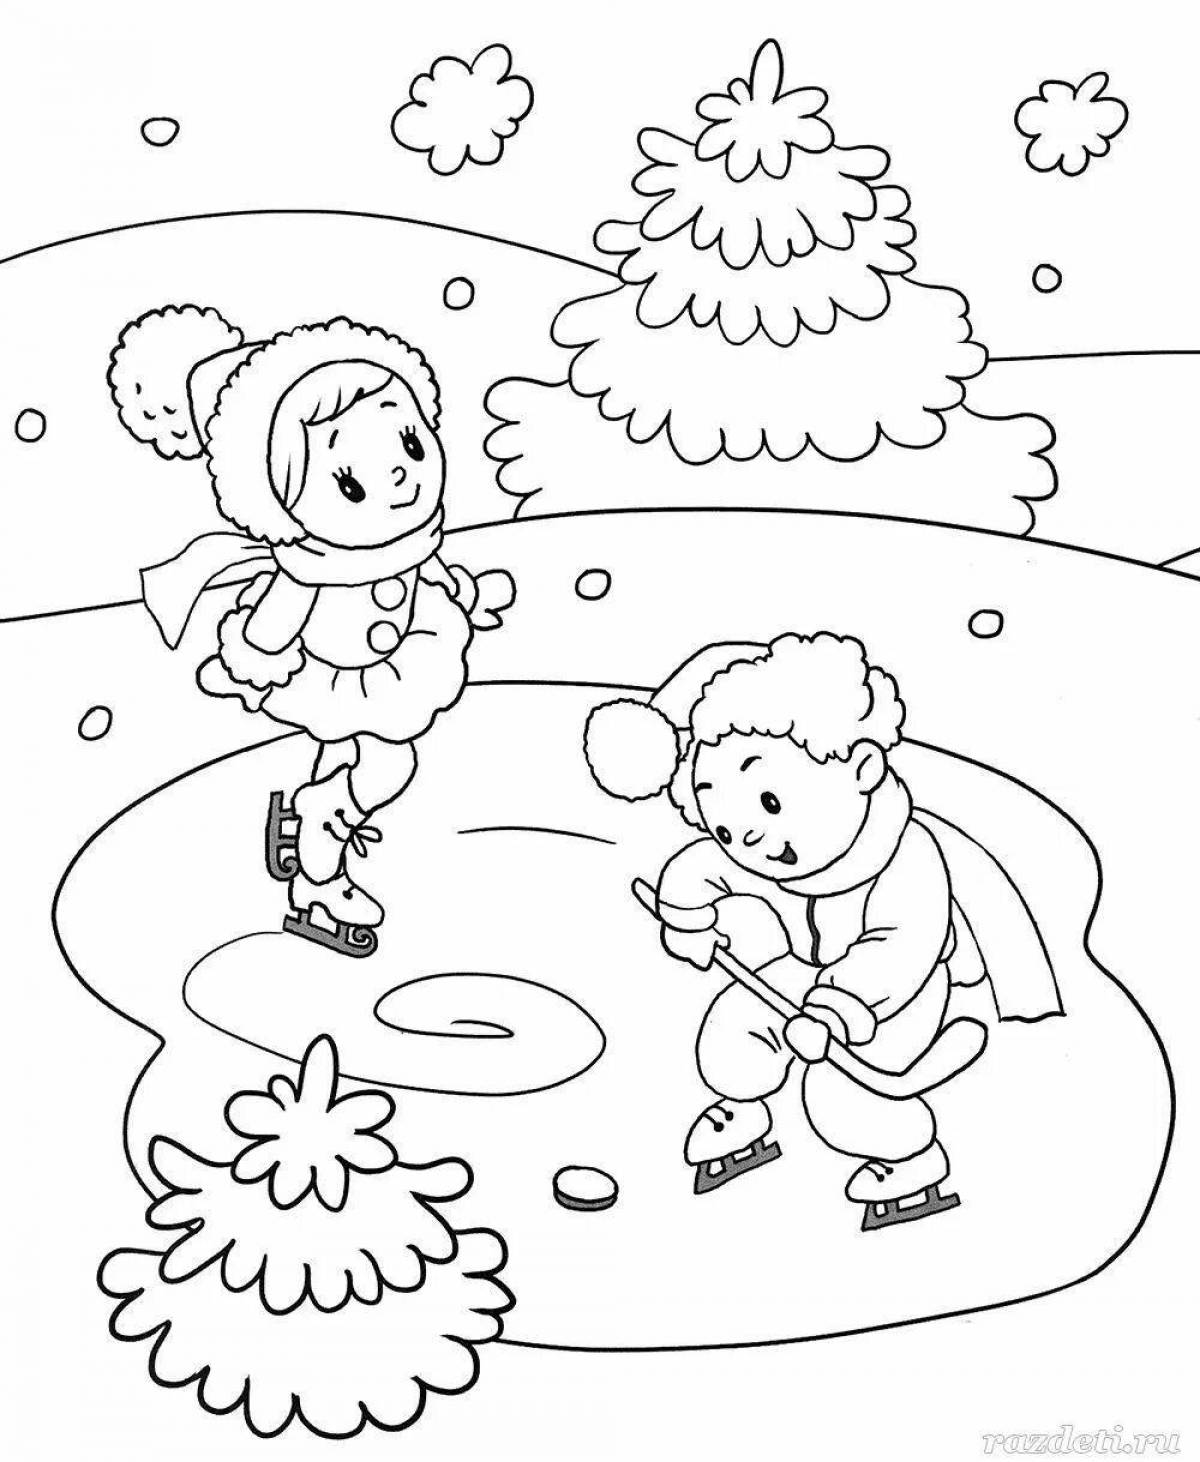 Fun winter coloring for preschoolers